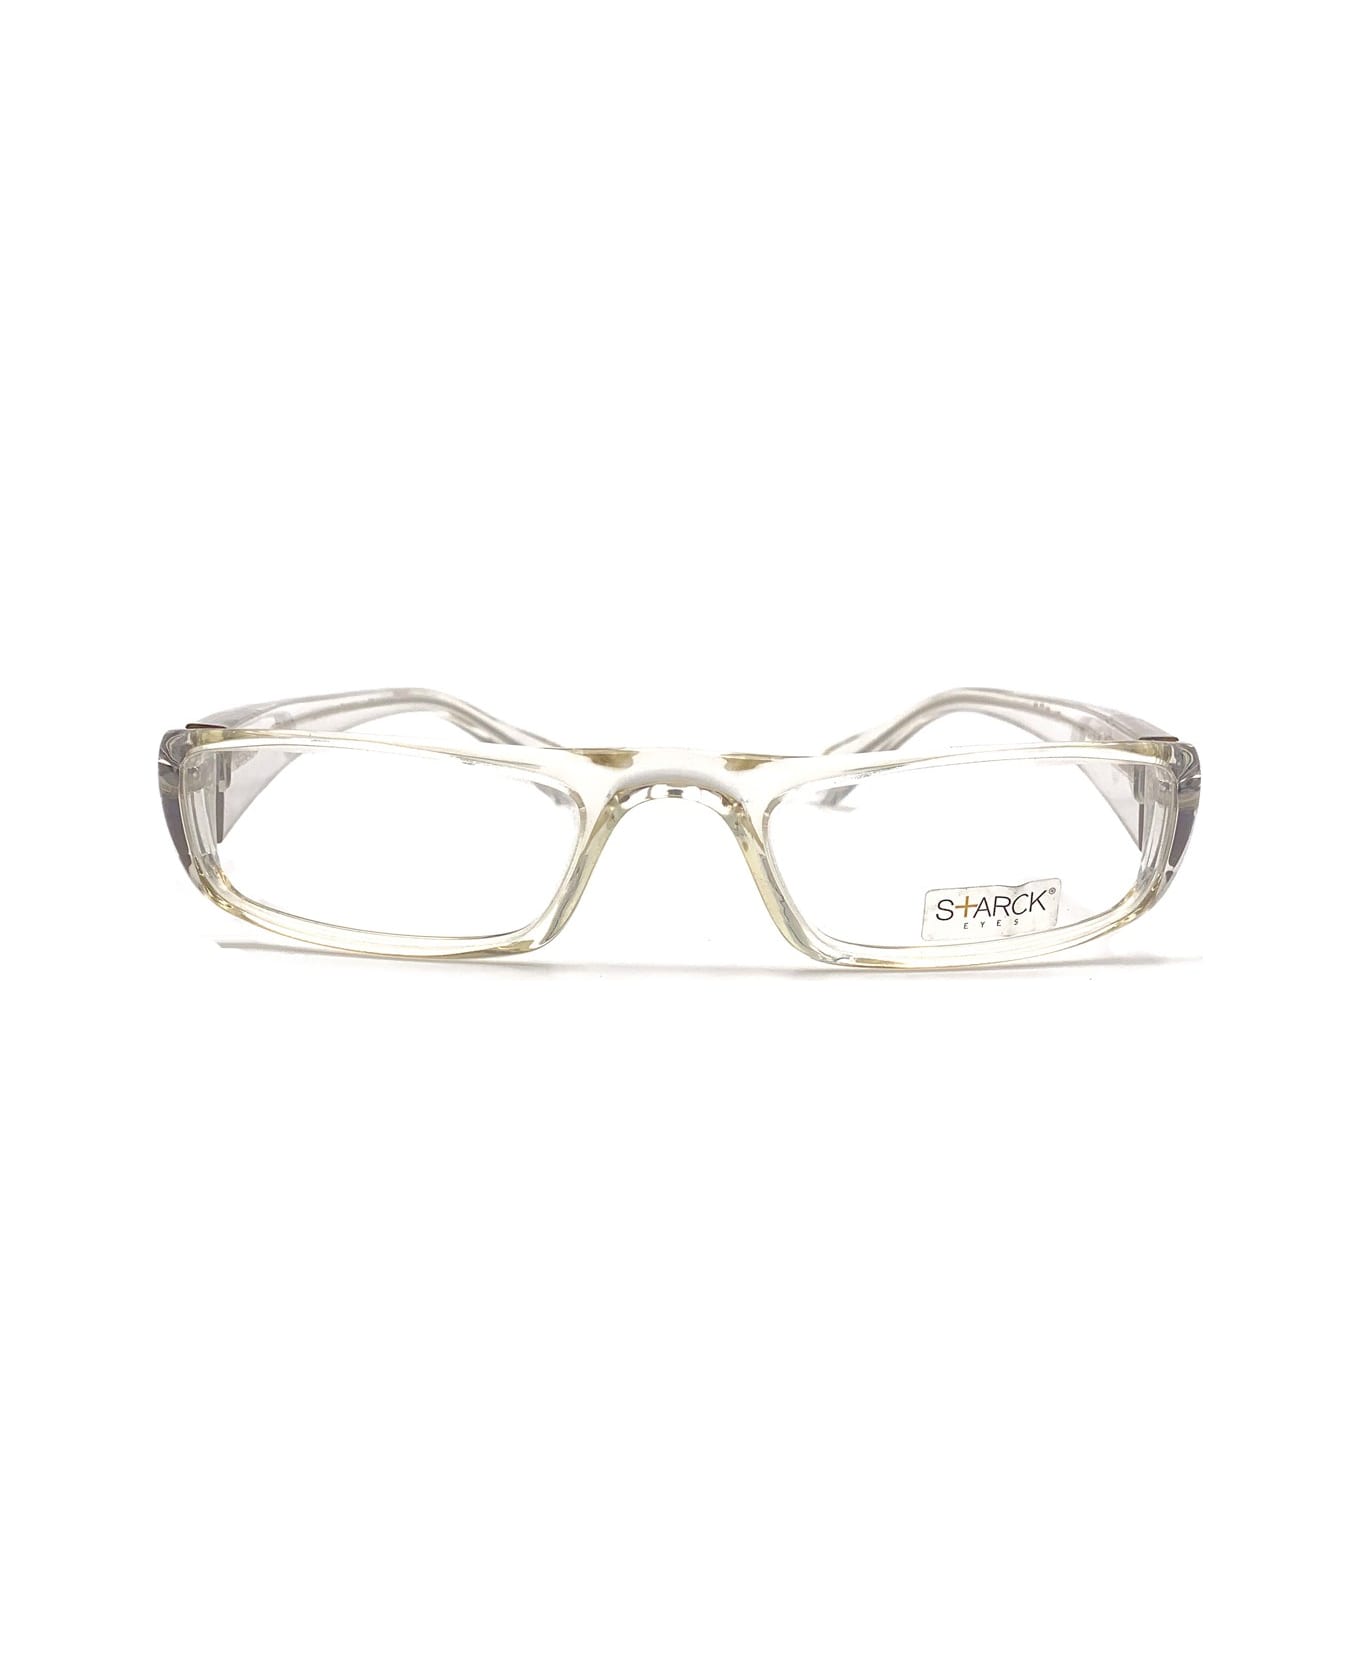 Philippe Starck Po315 Glasses - Beige アイウェア